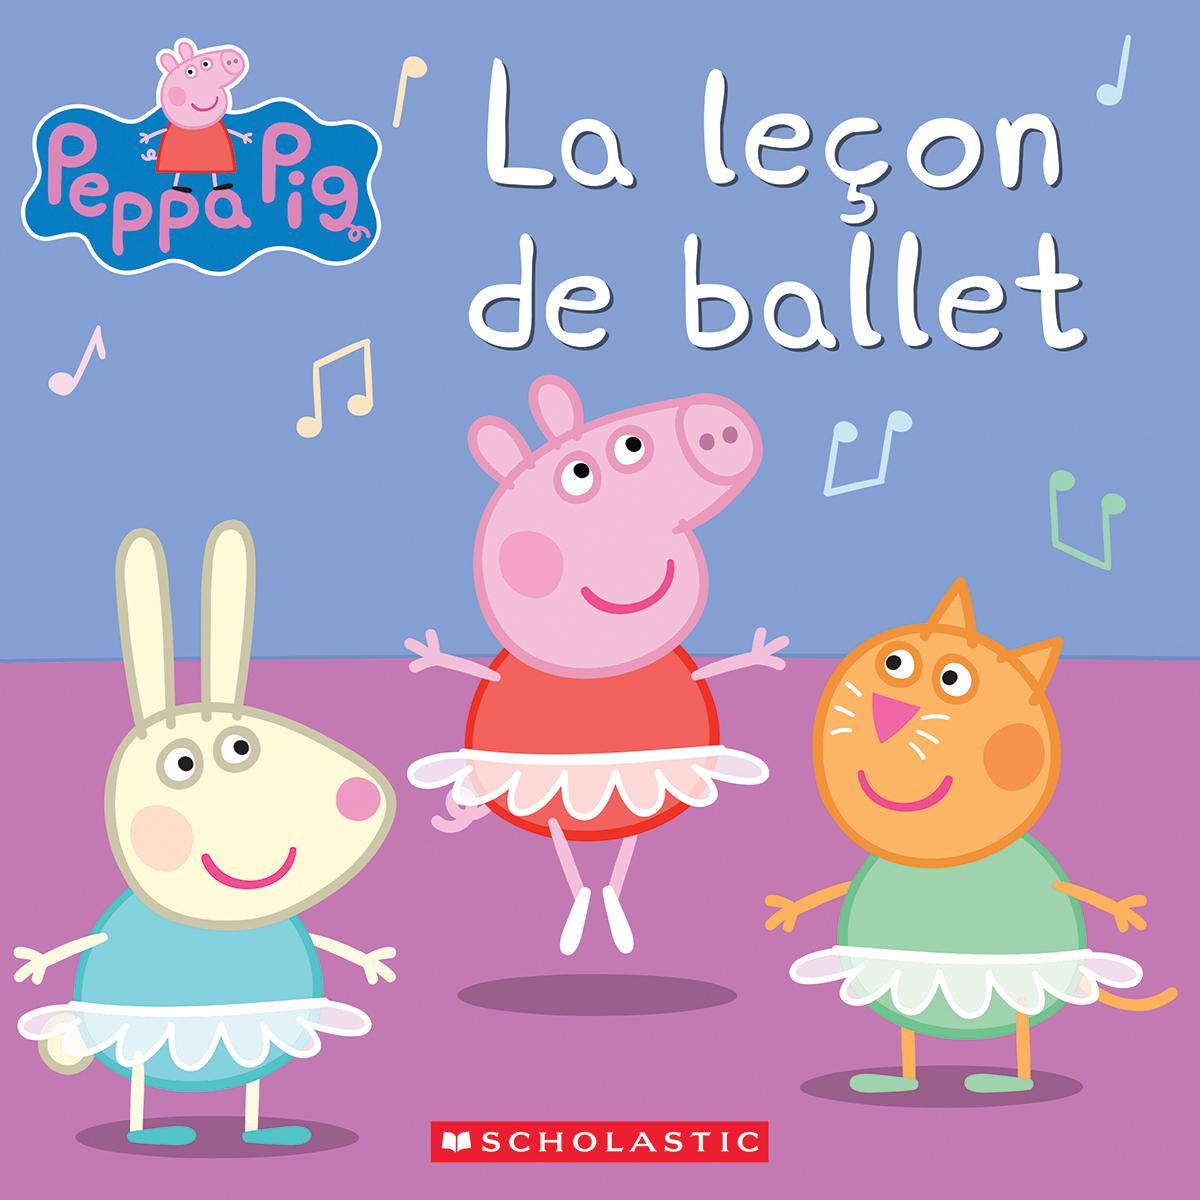  Peppa Pig : La leçon de ballet 